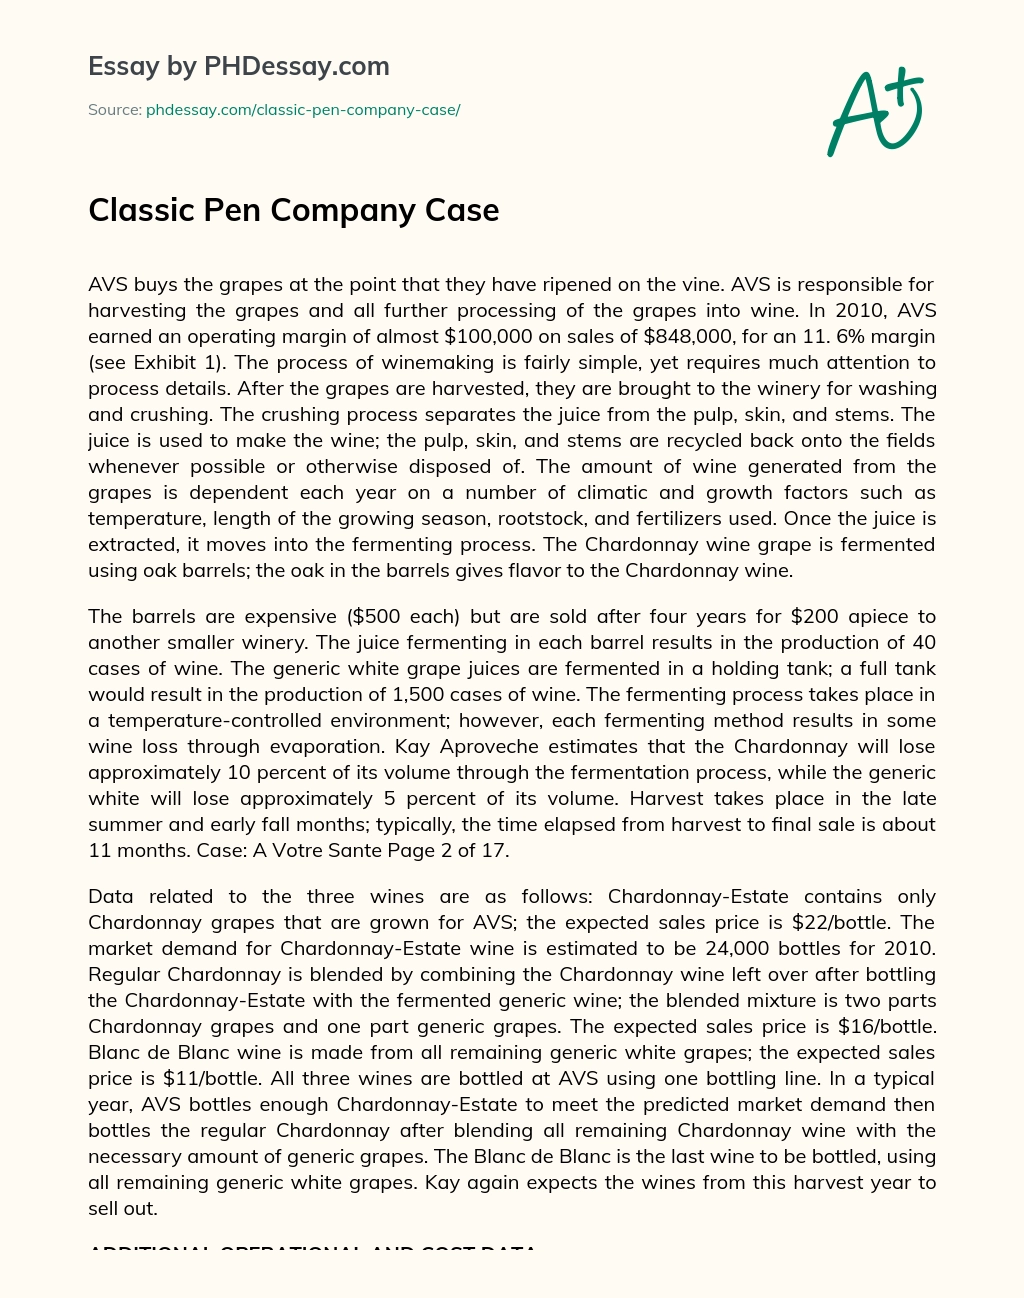 Classic Pen Company Case essay